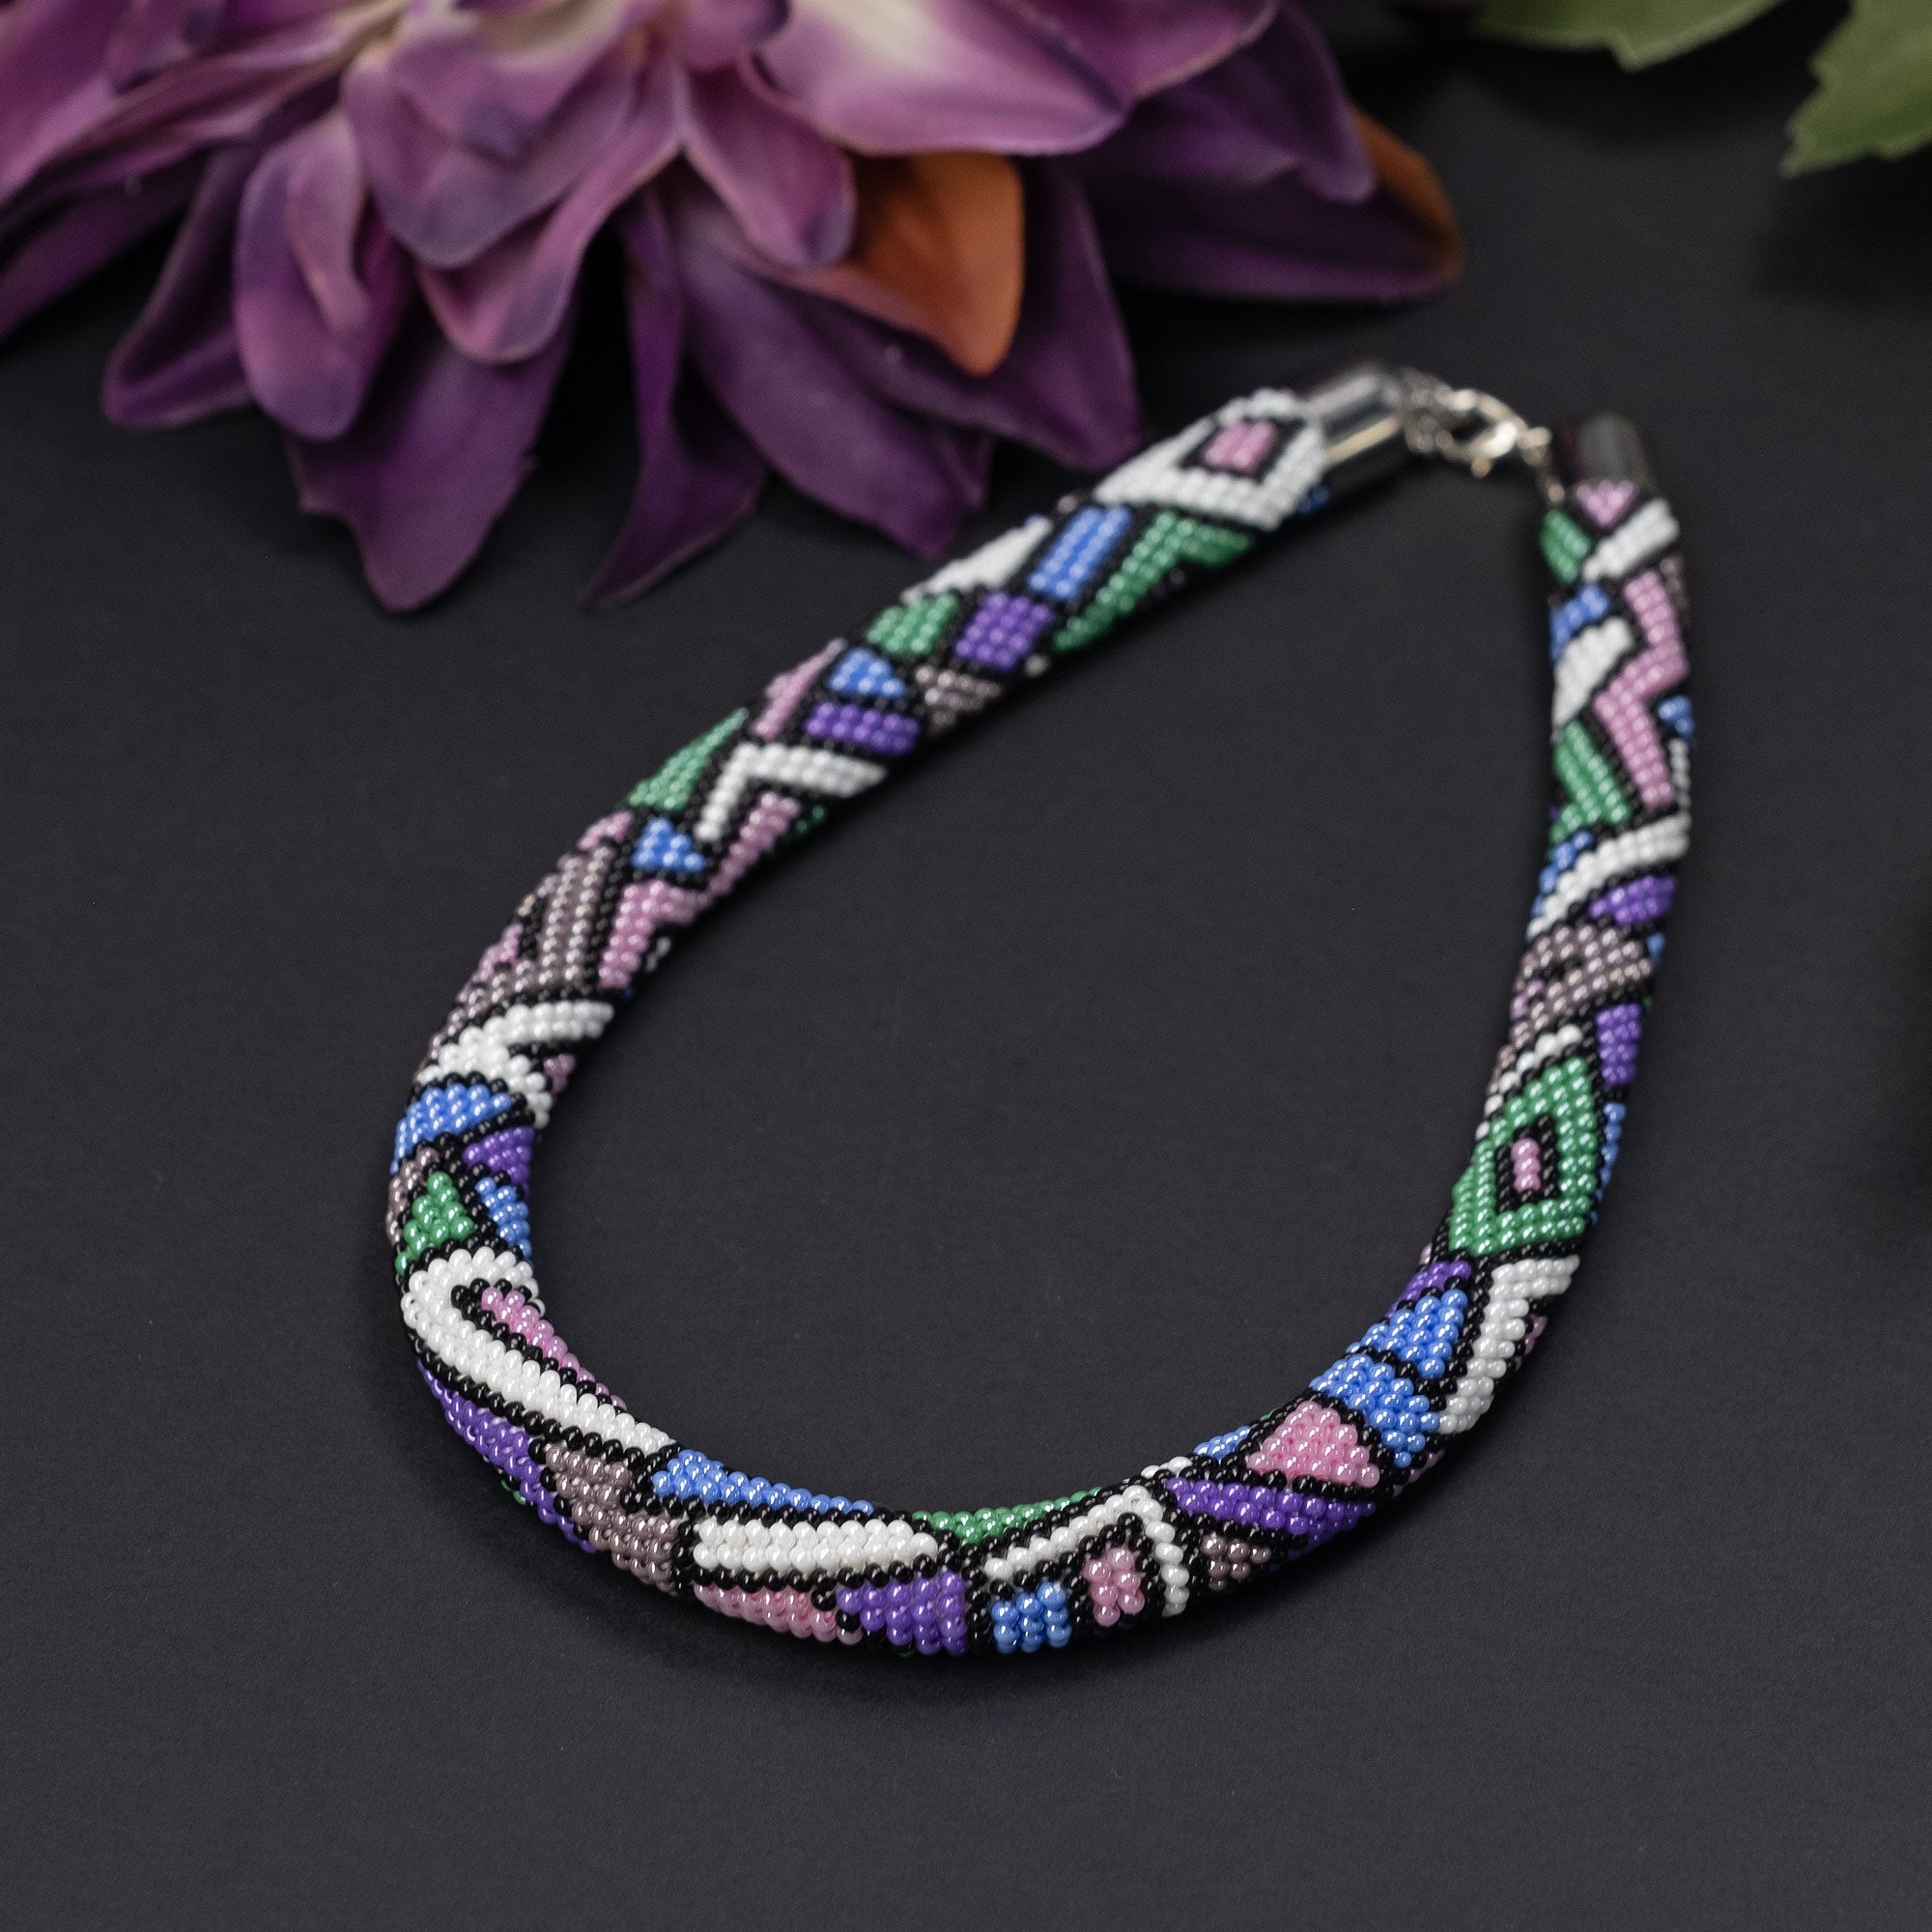 Beaded crochet necklace "Mosaic"